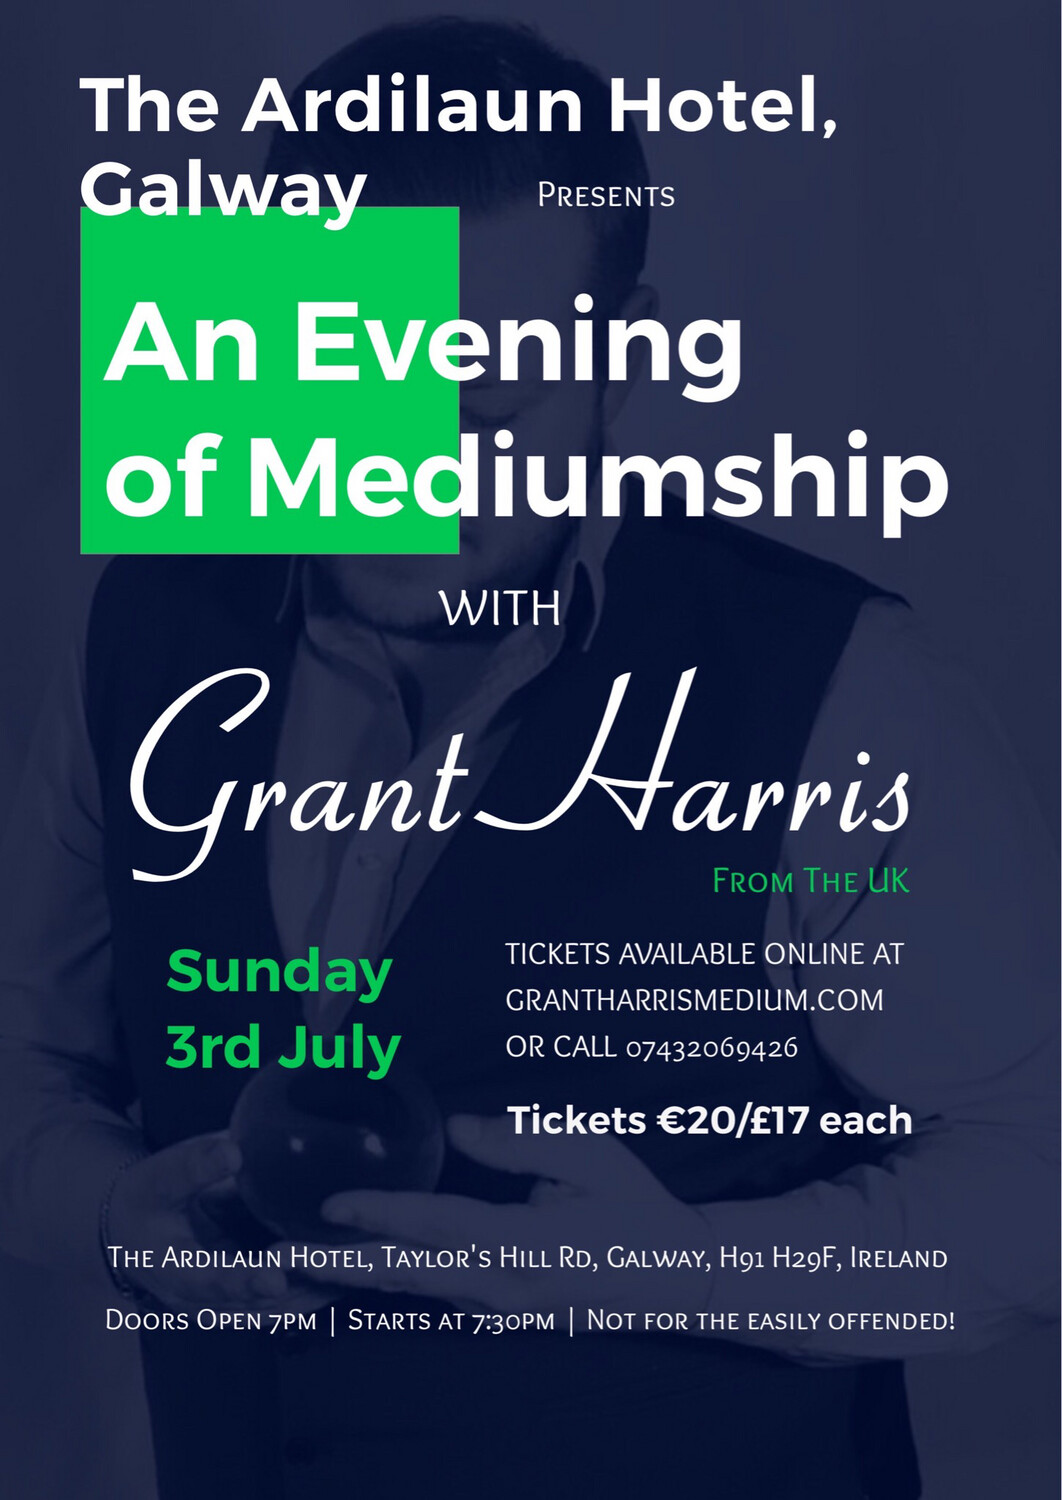 *IRELAND SPECIAL* - Evening of Mediumship, The Ardilaun Hotel, Galway, Ireland, Sun 3rd July 2022